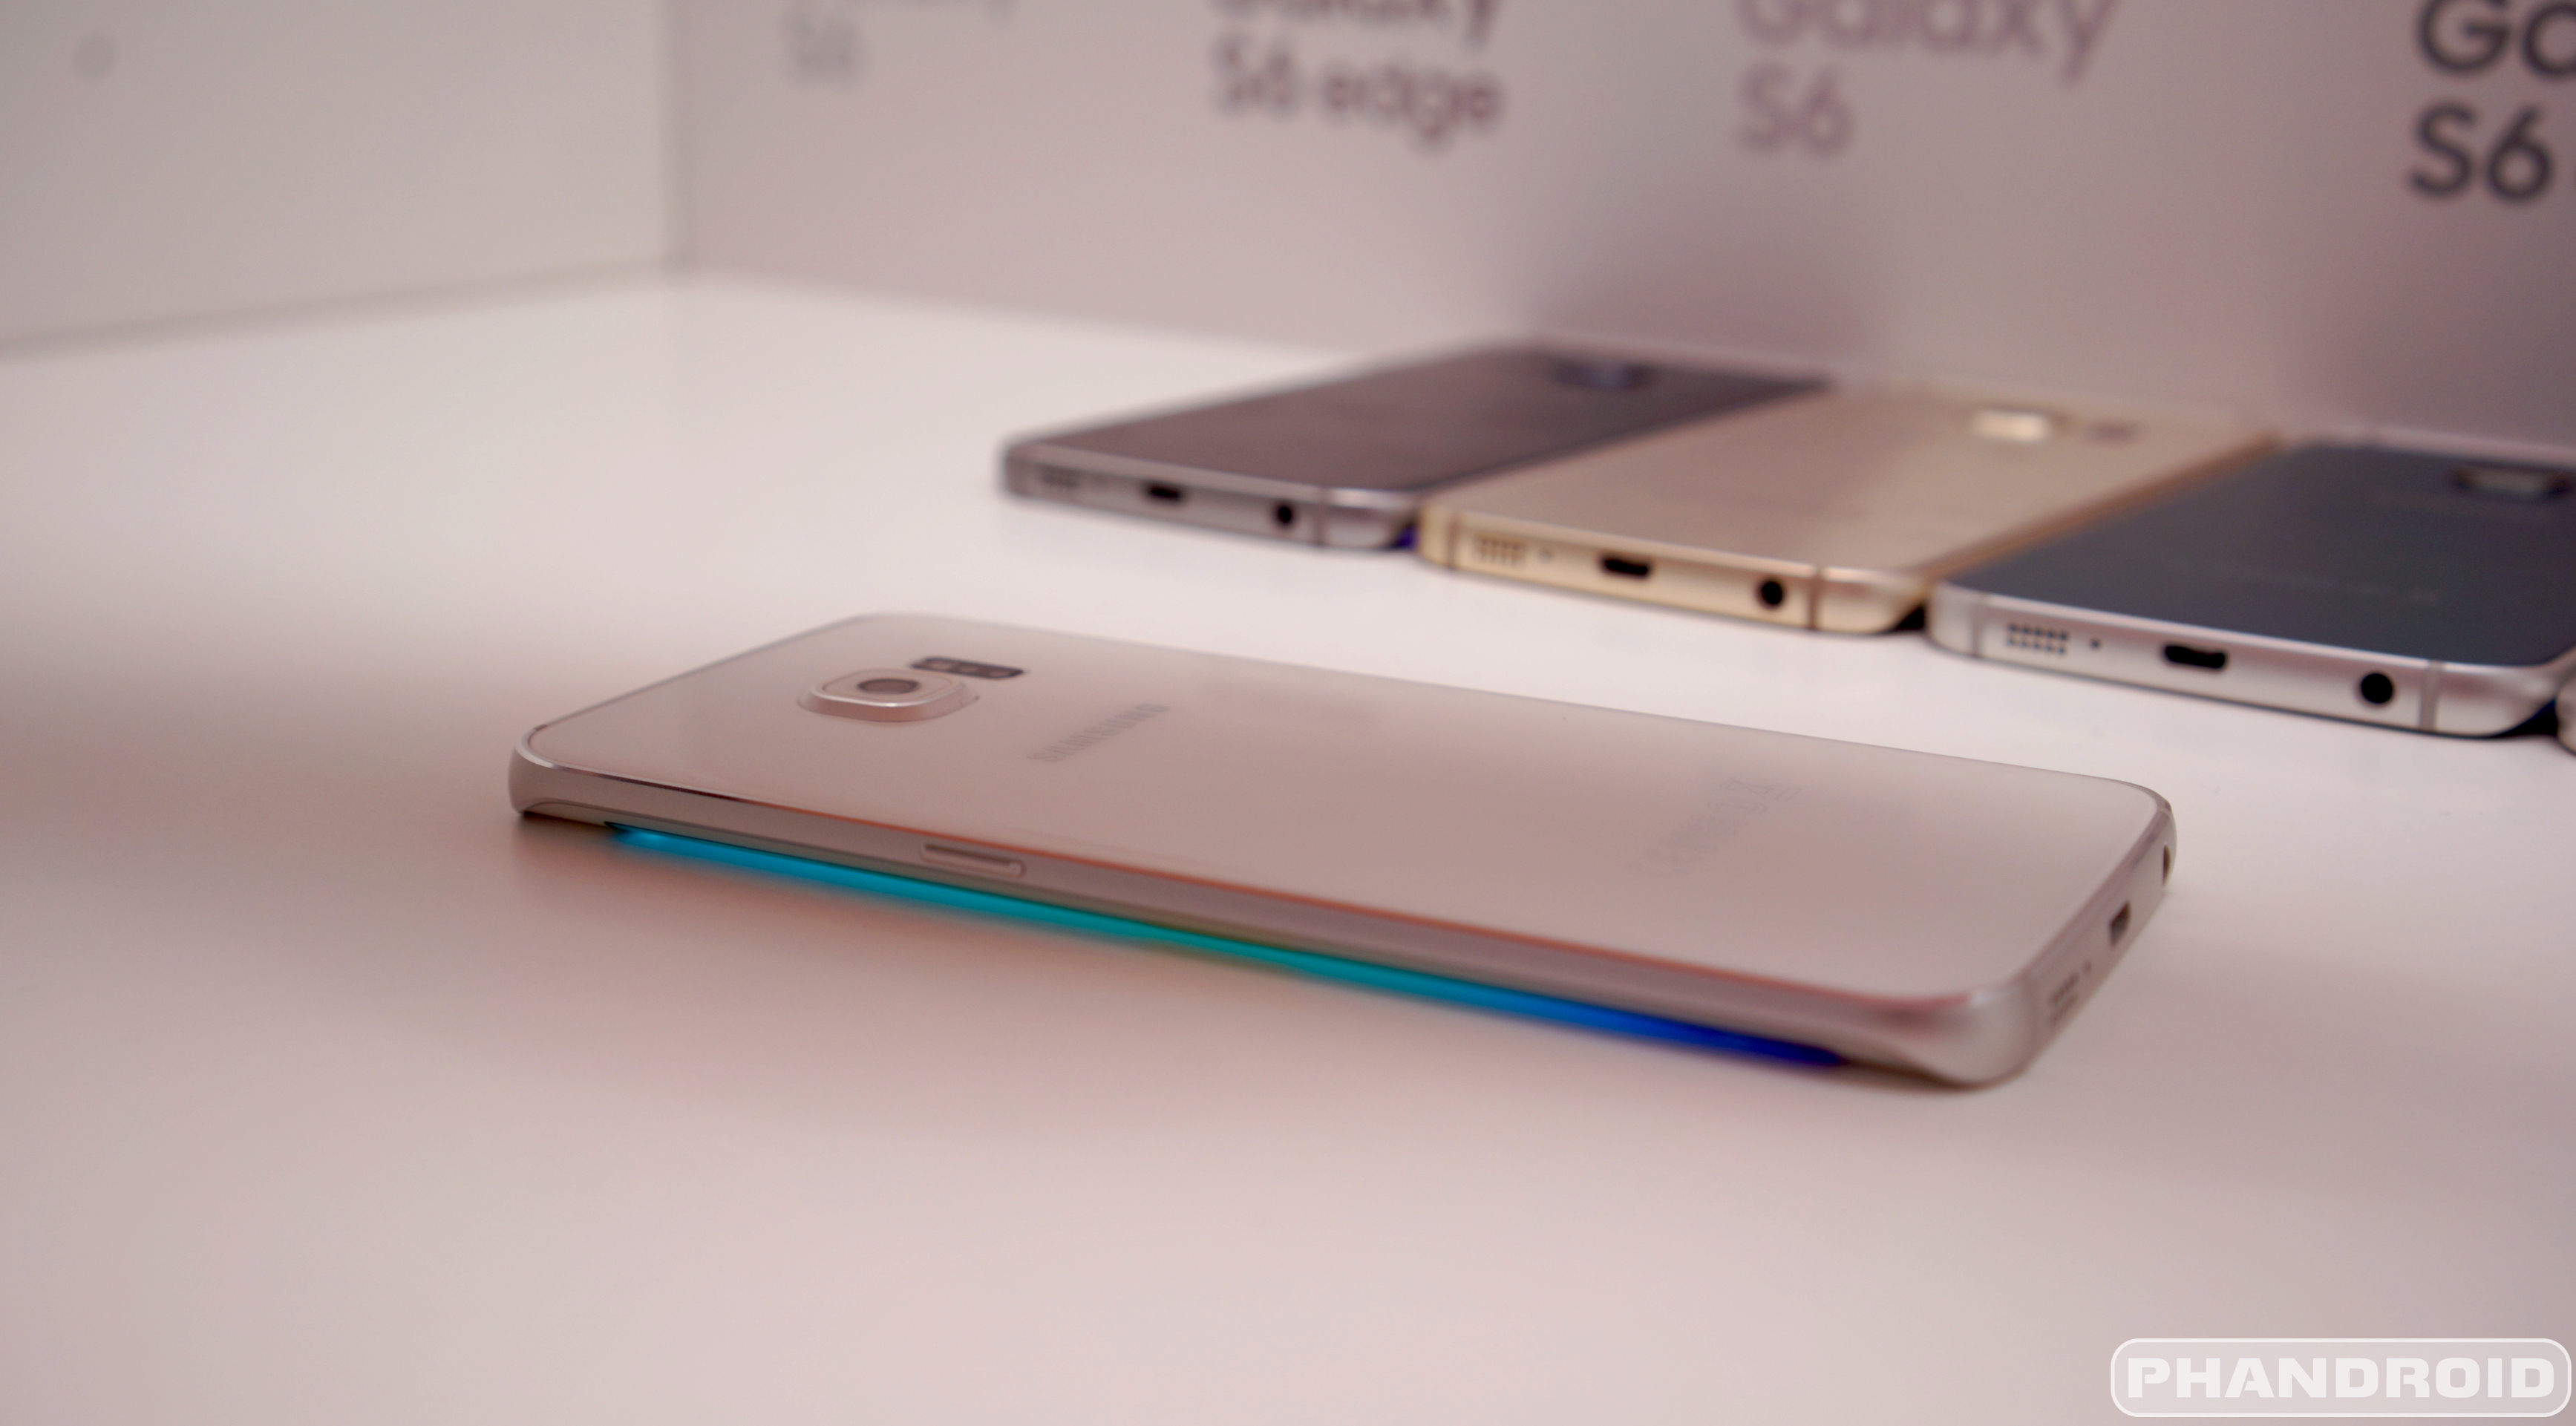 Leesbaarheid bereiden Kudde 10 Tips every Samsung Galaxy S6 Edge owner should know – Phandroid